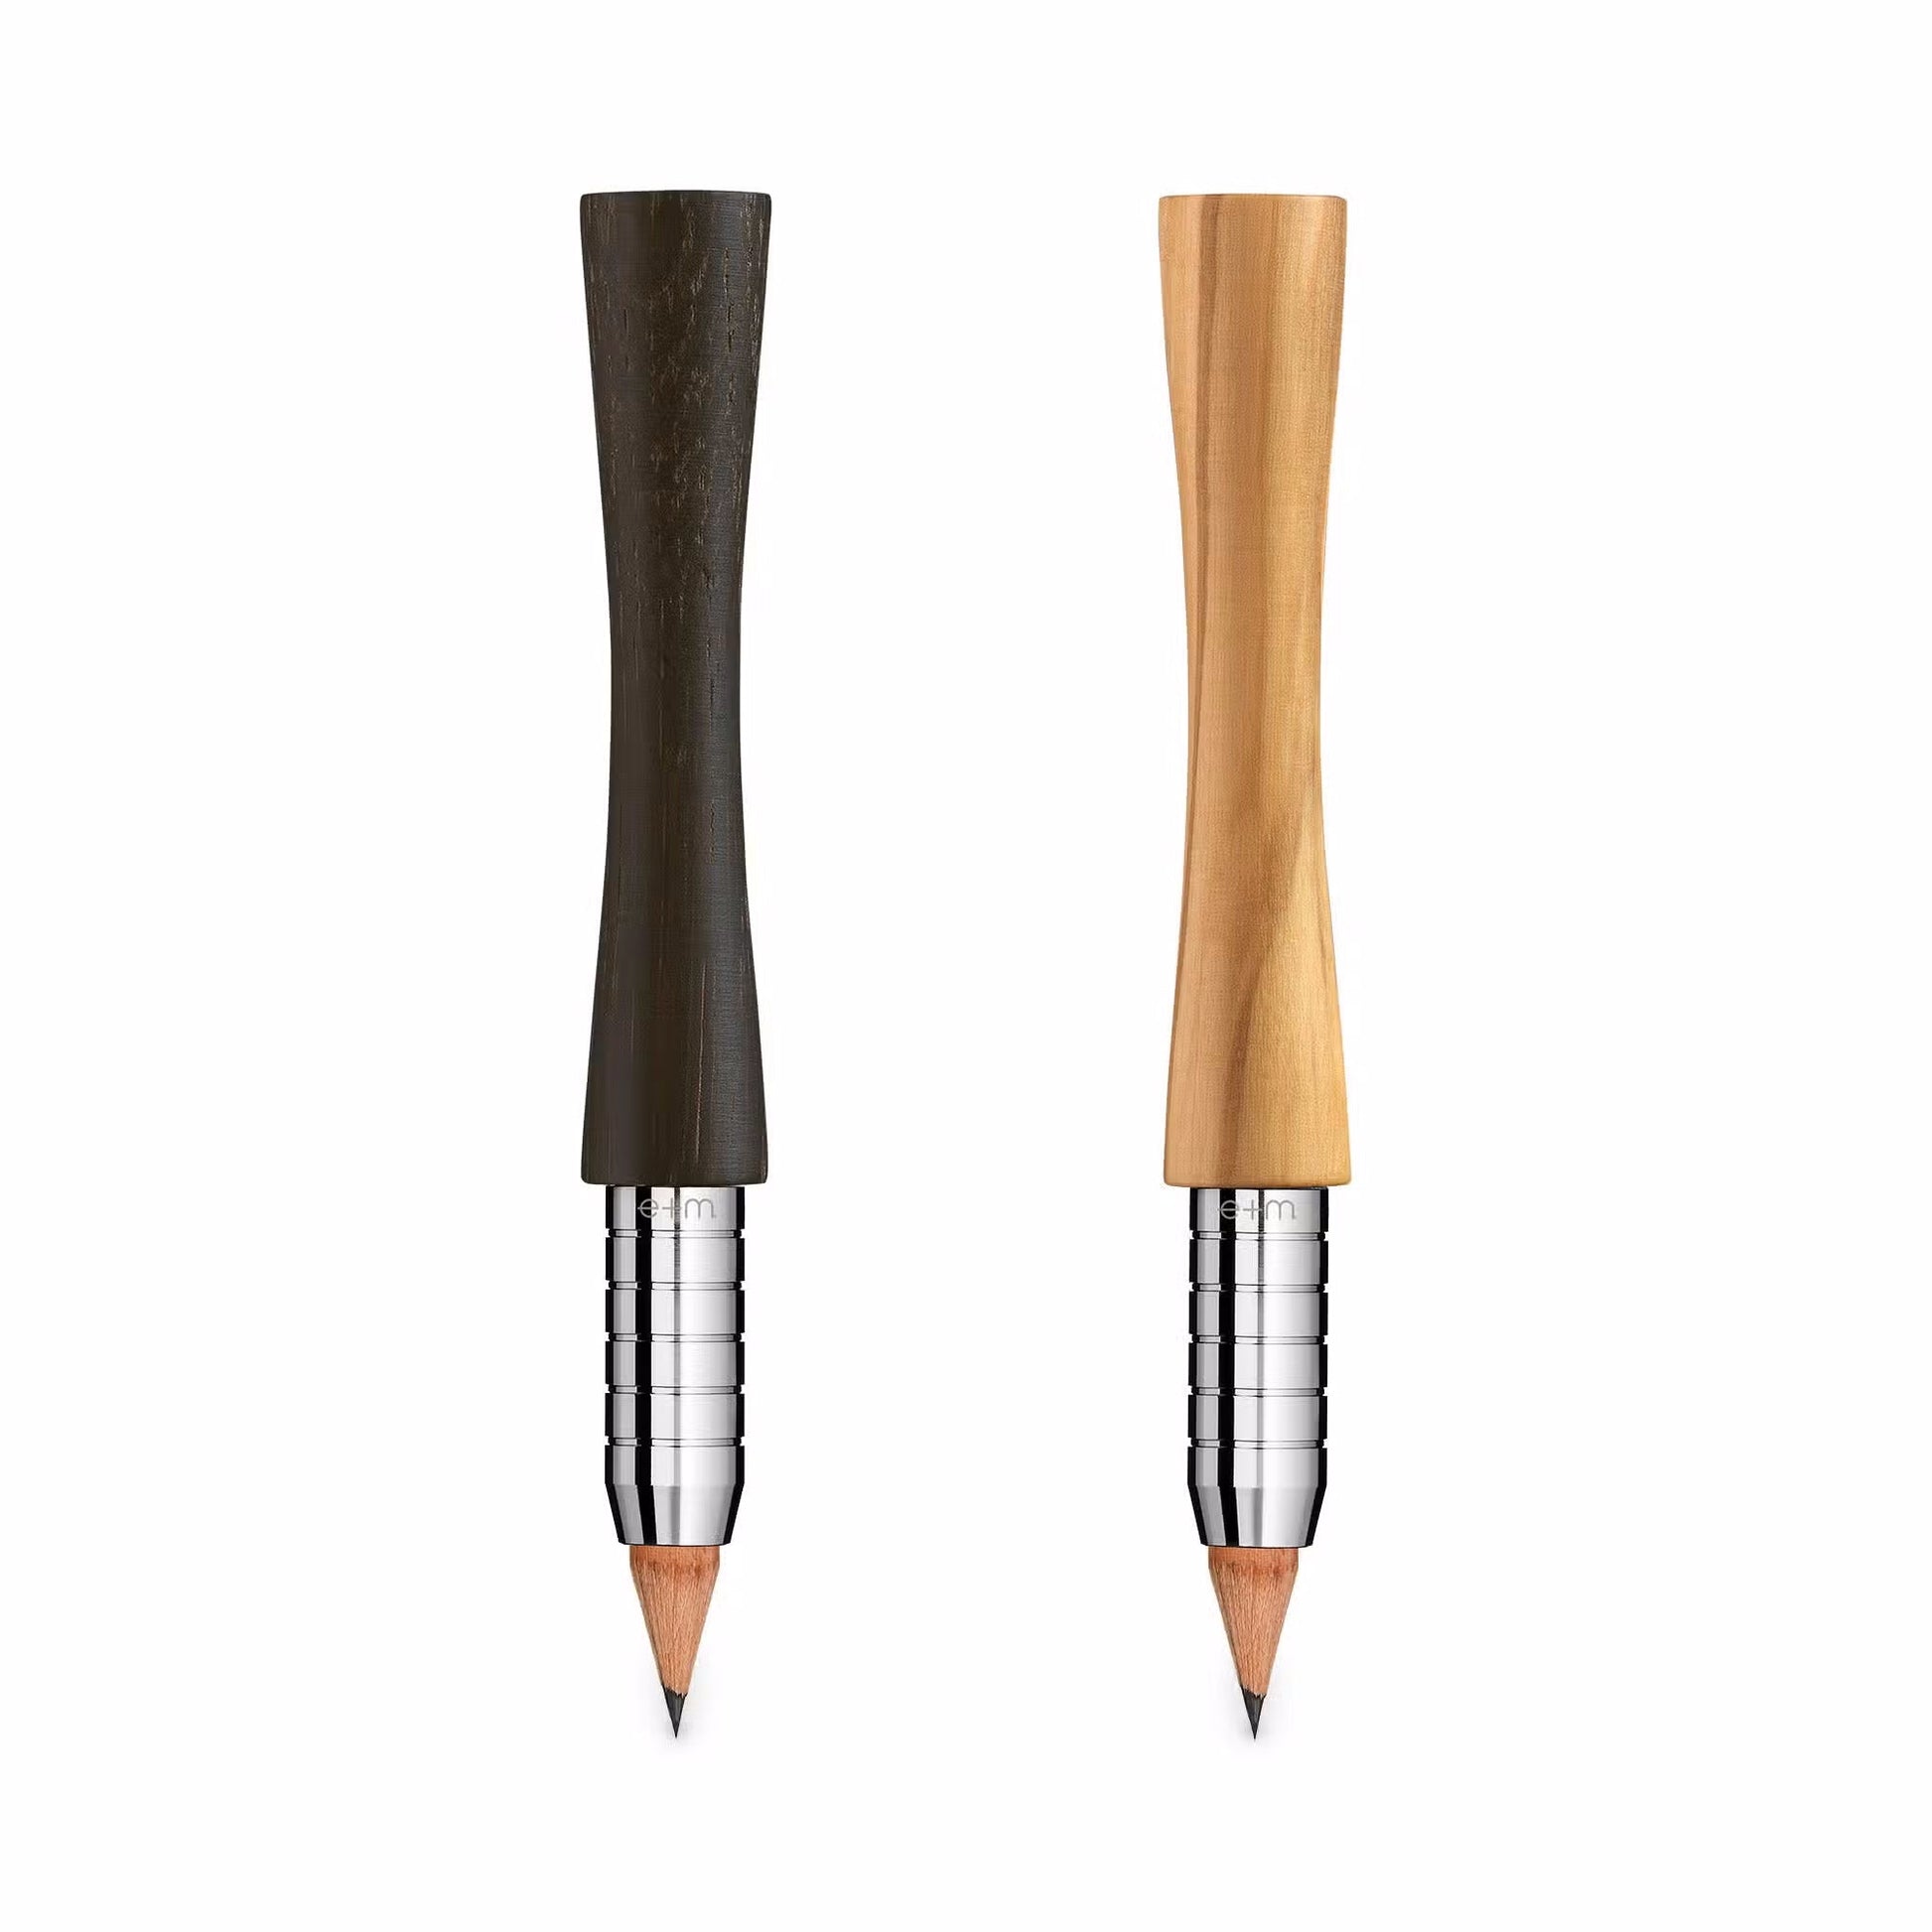 e+m Holzprodukte MOTUS + Pencil Extenderse+m Holzprodukte MOTUS + Pencil Extender with pencils 